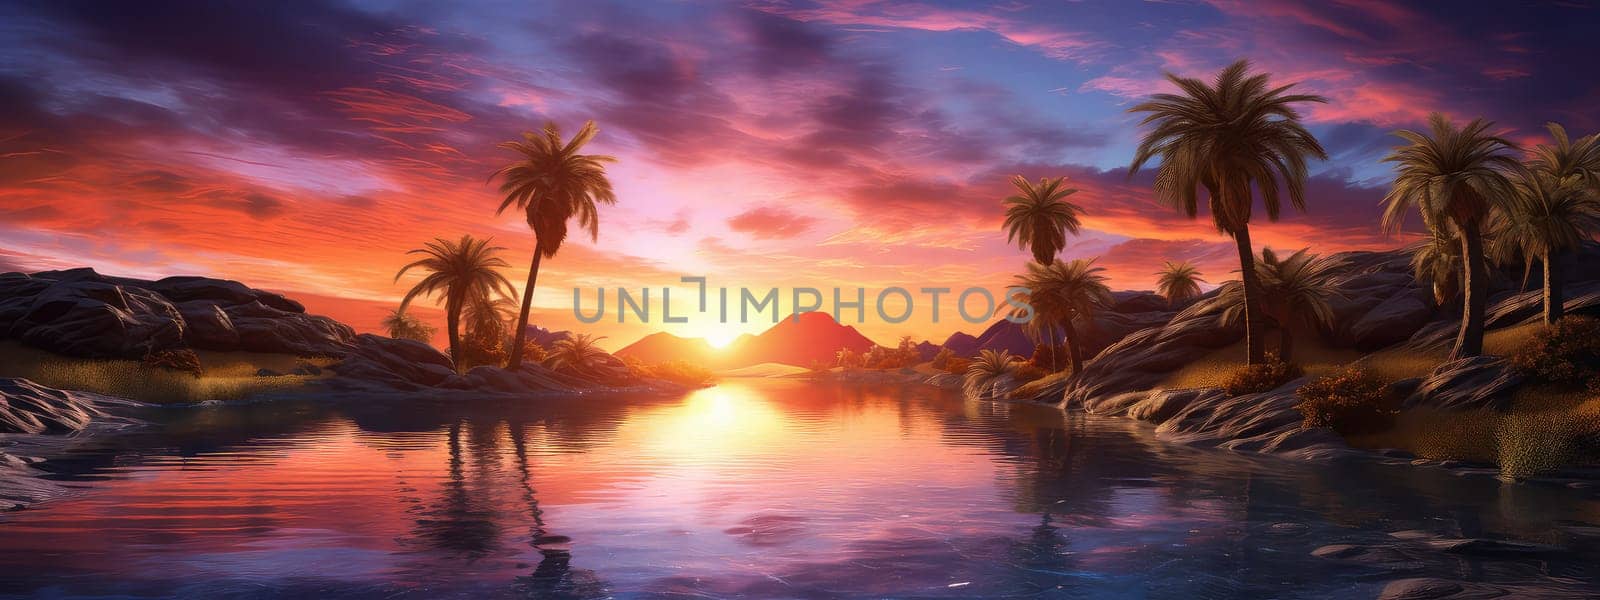 Desert oasis at sunset photo realistic illustration - Generative AI. Desert, oasis, water, palms, sunset.